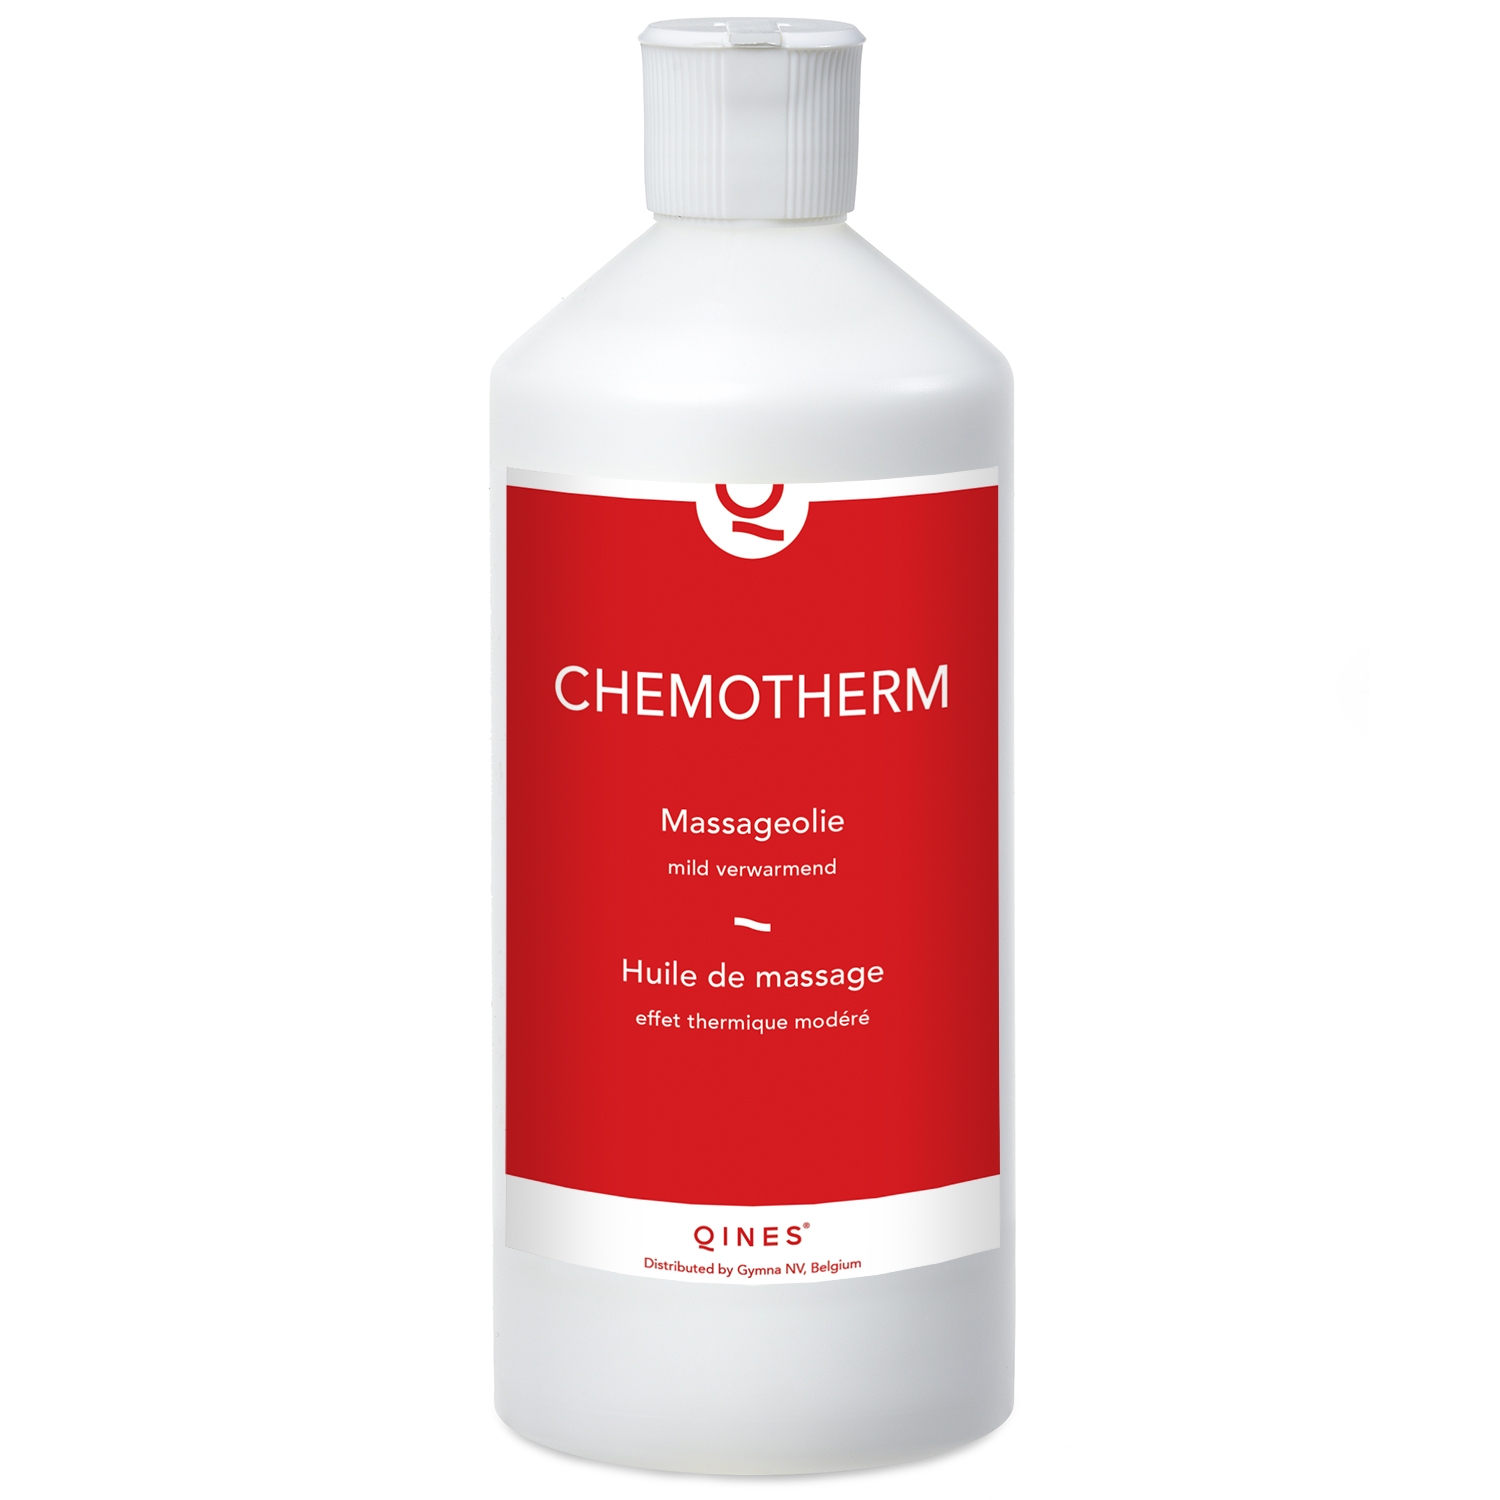 Massage olie Chemotherm verwarmend - Qines - 500 ml